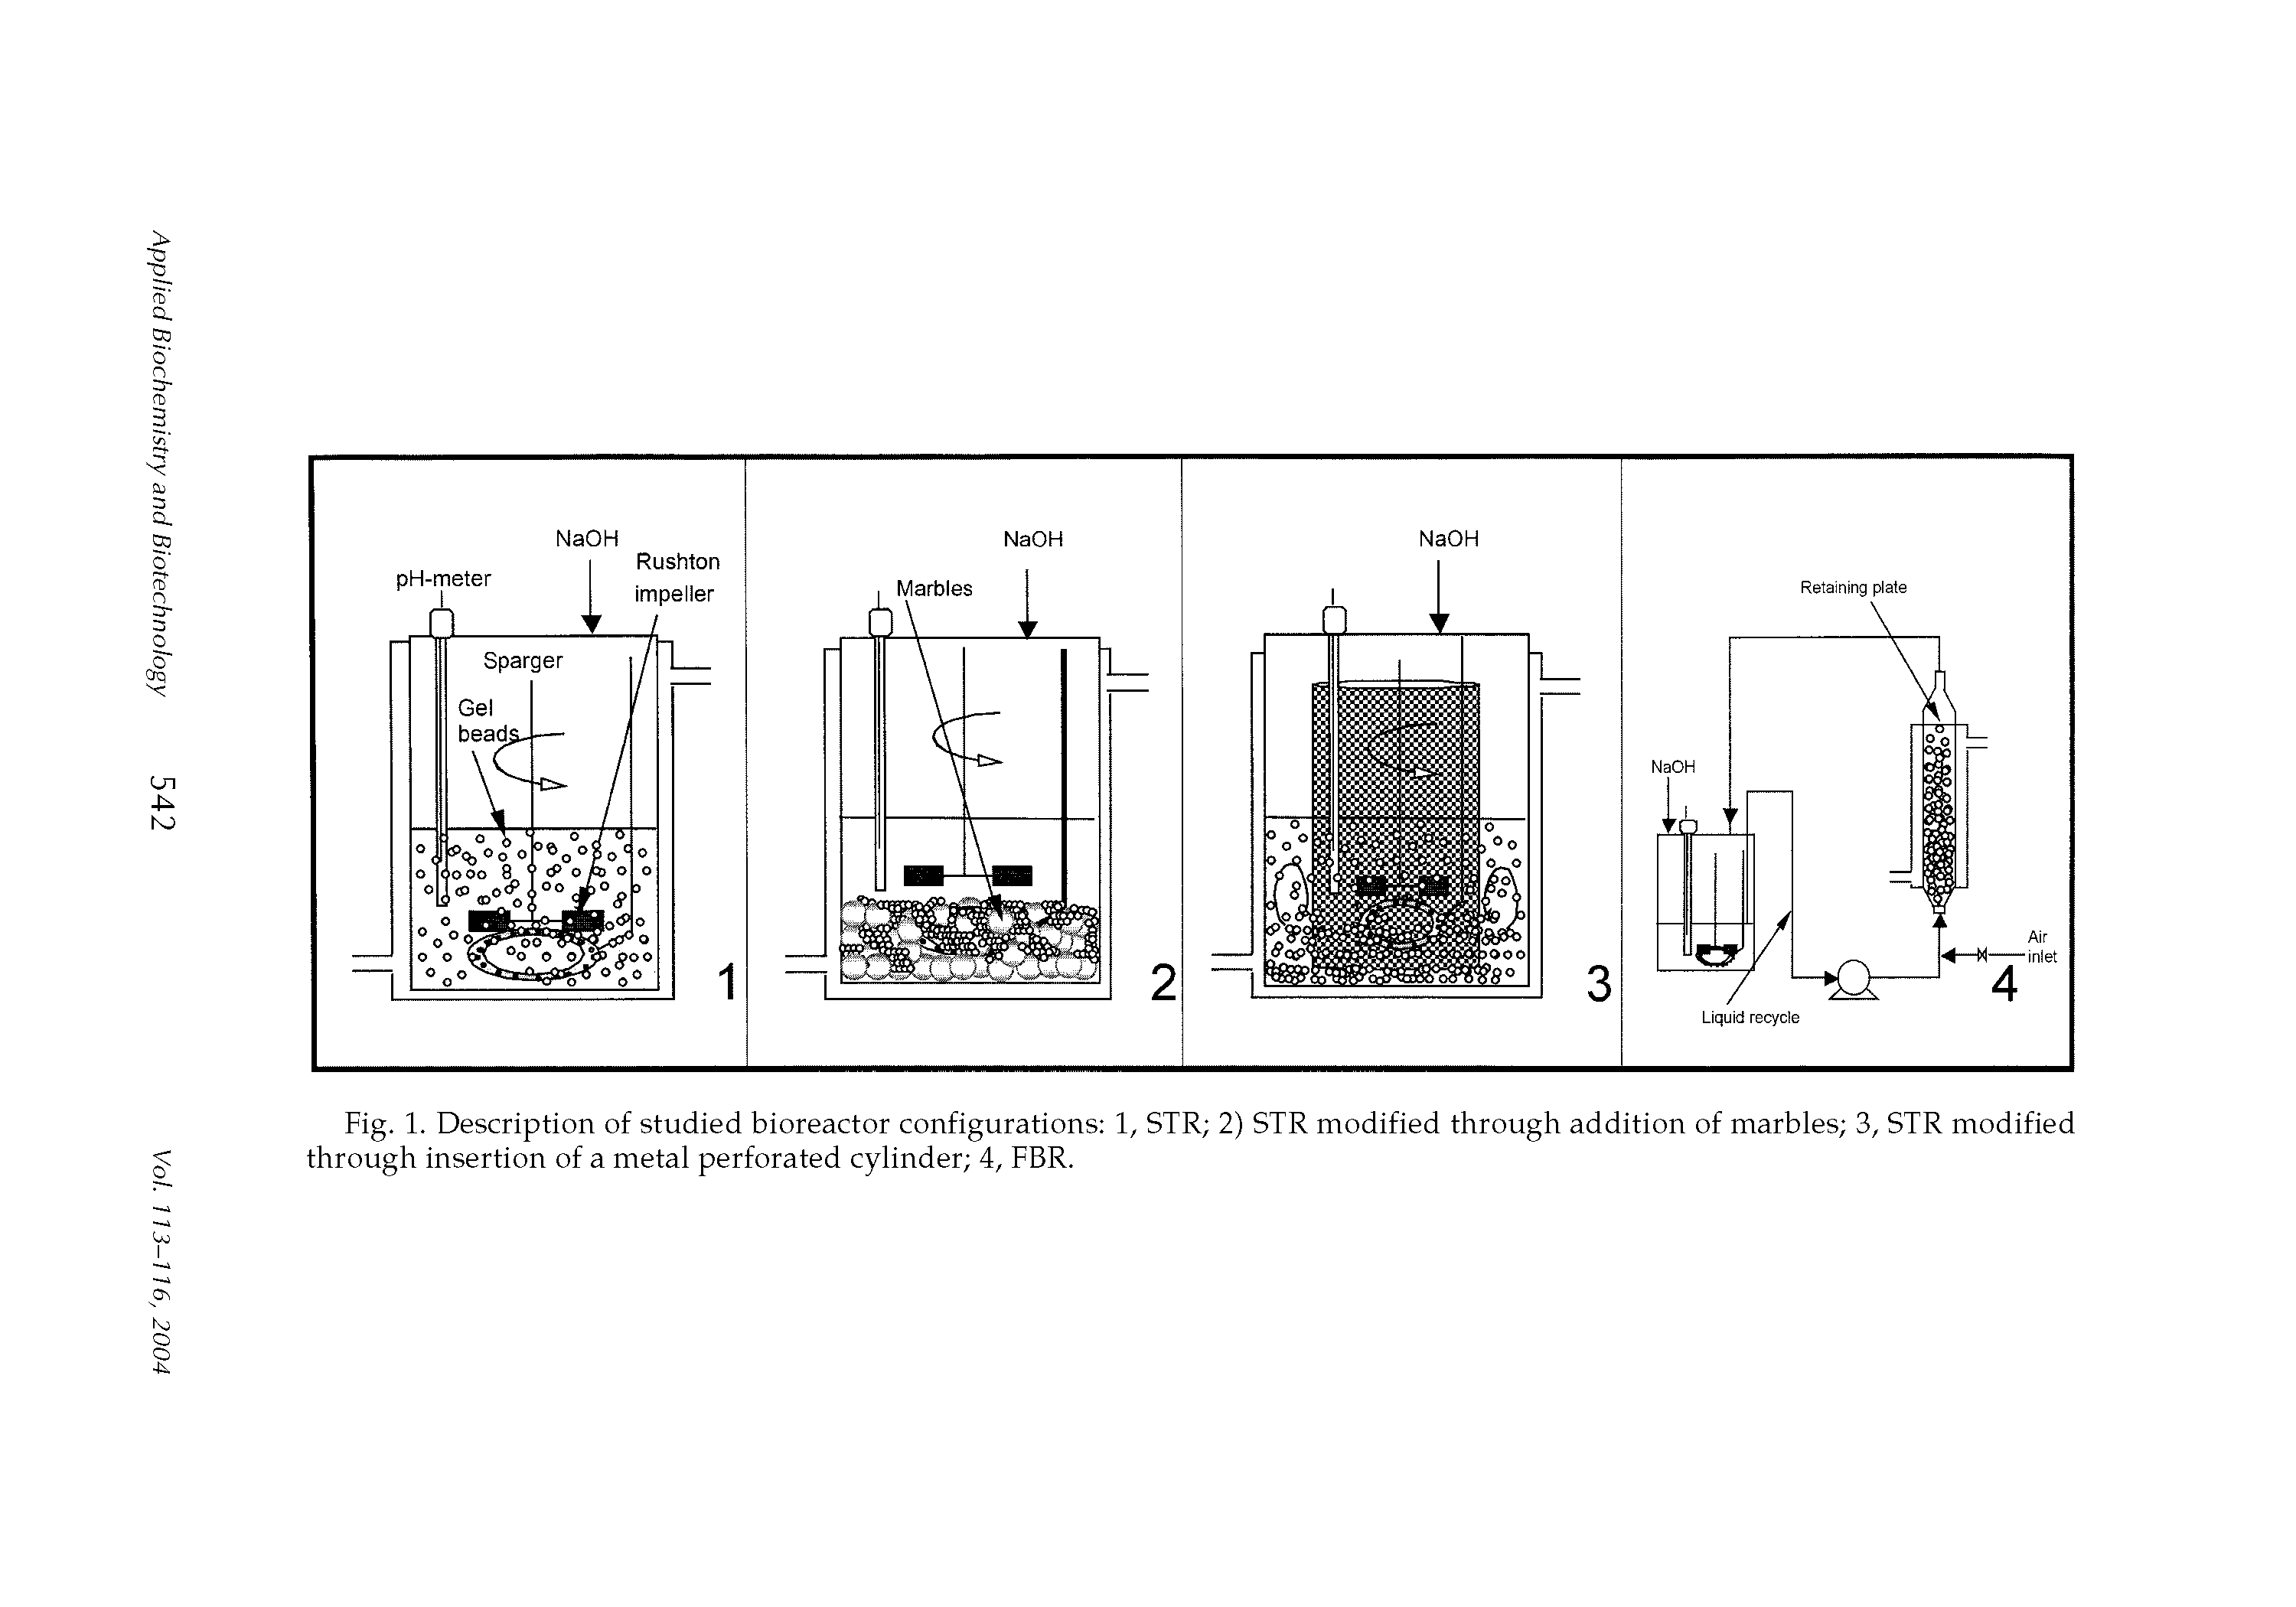 Fig. 1. Description of studied bioreactor configurations 1, STR 2) STR modified through addition of marbles 3, STR modified through insertion of a metal perforated cylinder 4, FBR.